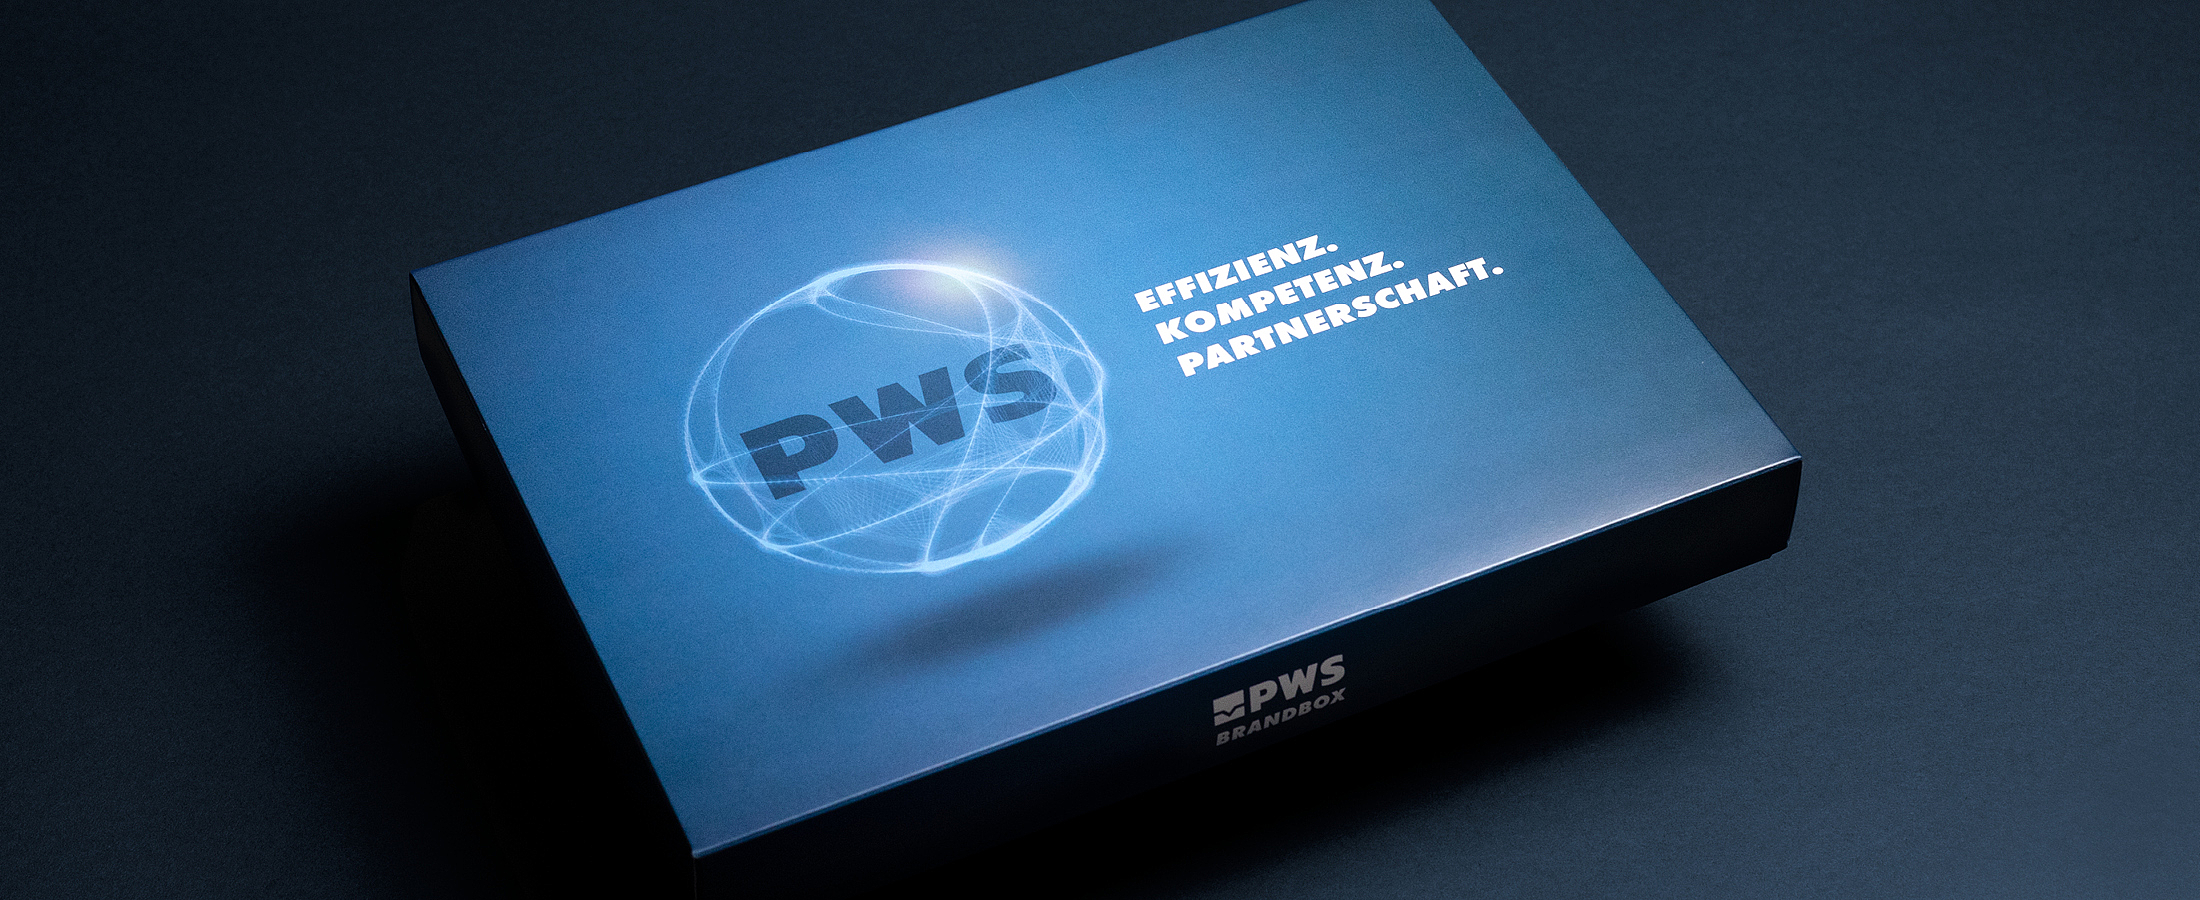 Referenz PWS-Brandbox